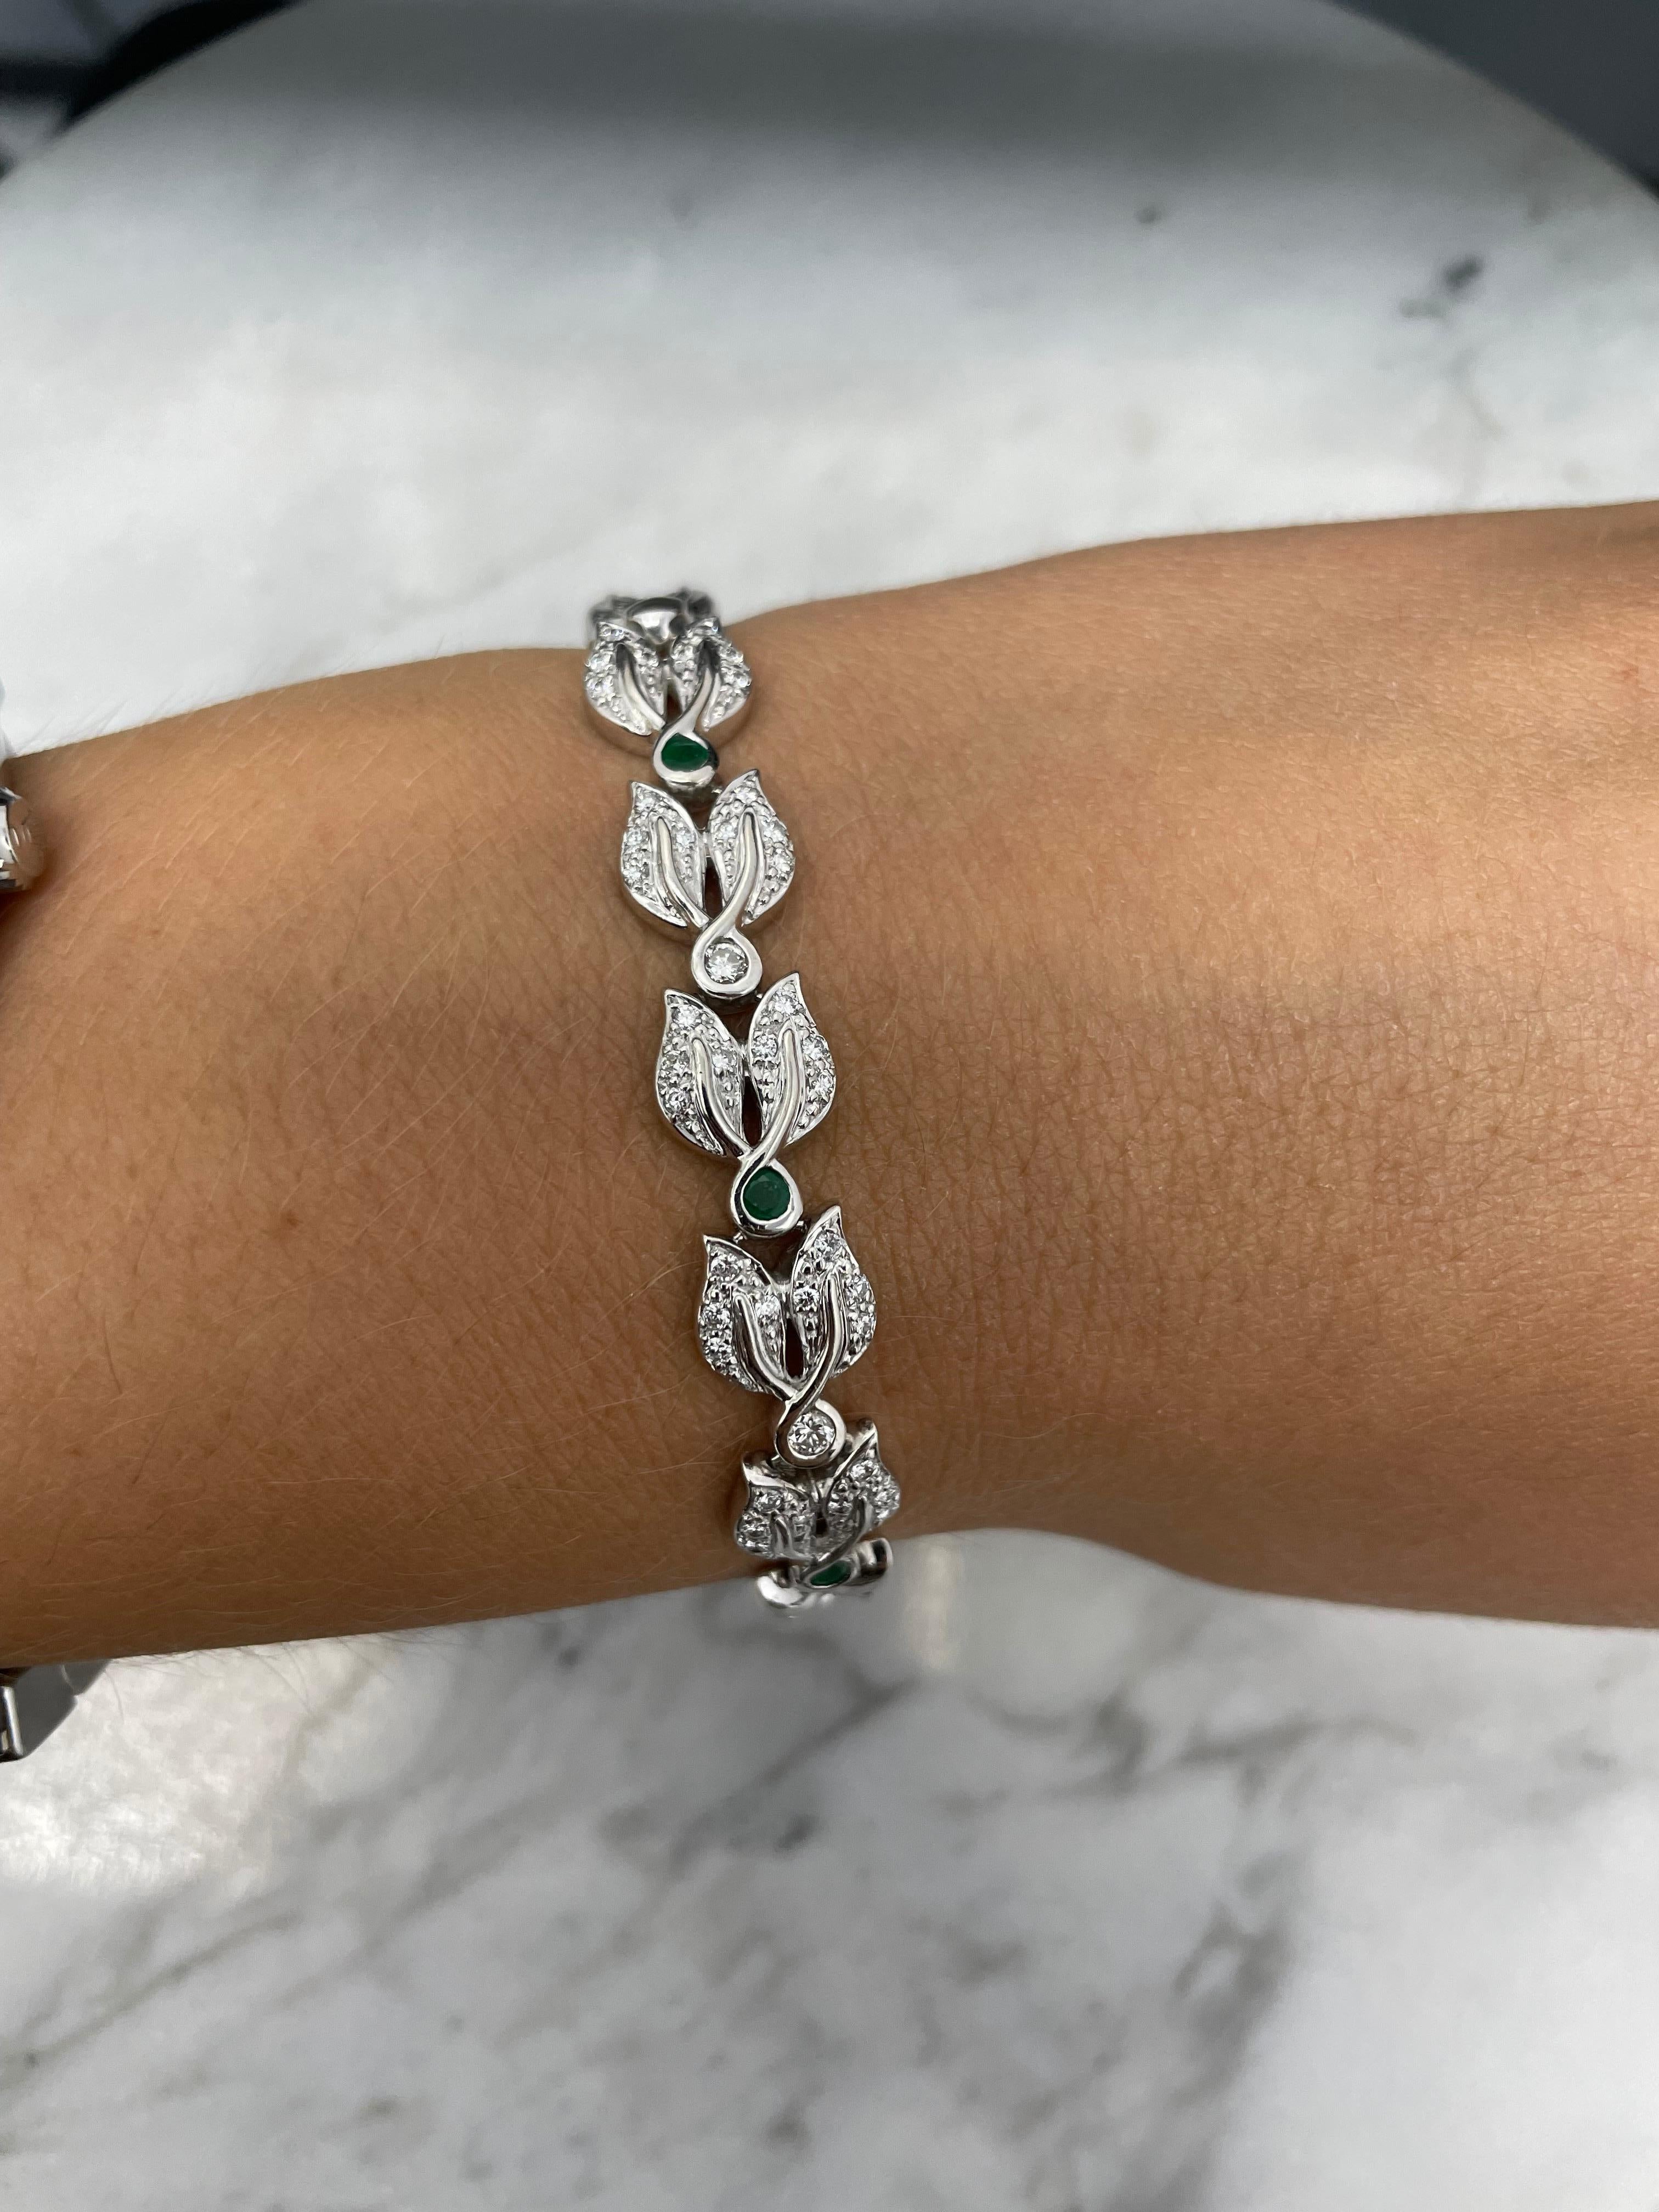 18K White Gold Diamond and Emerald Floral Bracelet

Grams 22.9